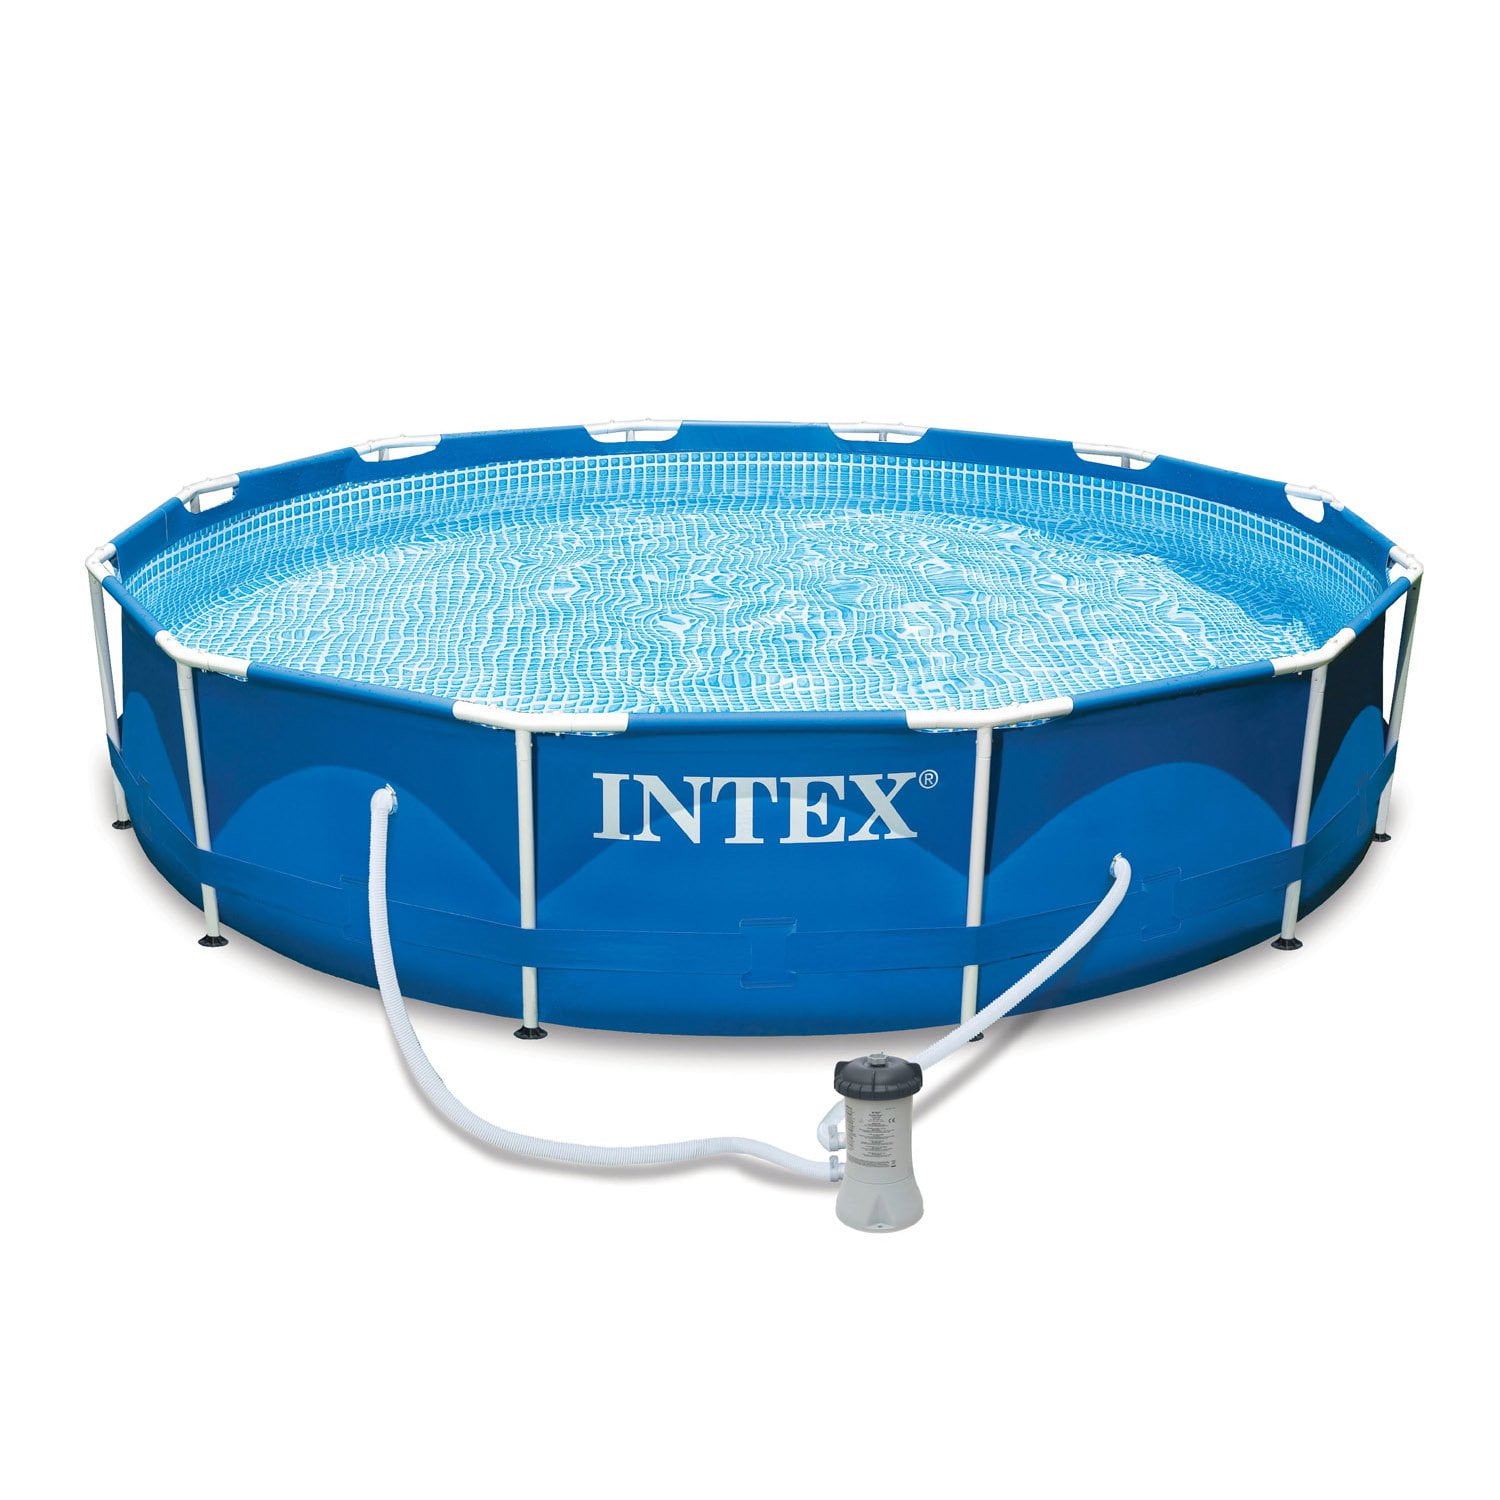 Creative Intex 12 X 39 Metal Frame Above Ground Swimming Pool News Update